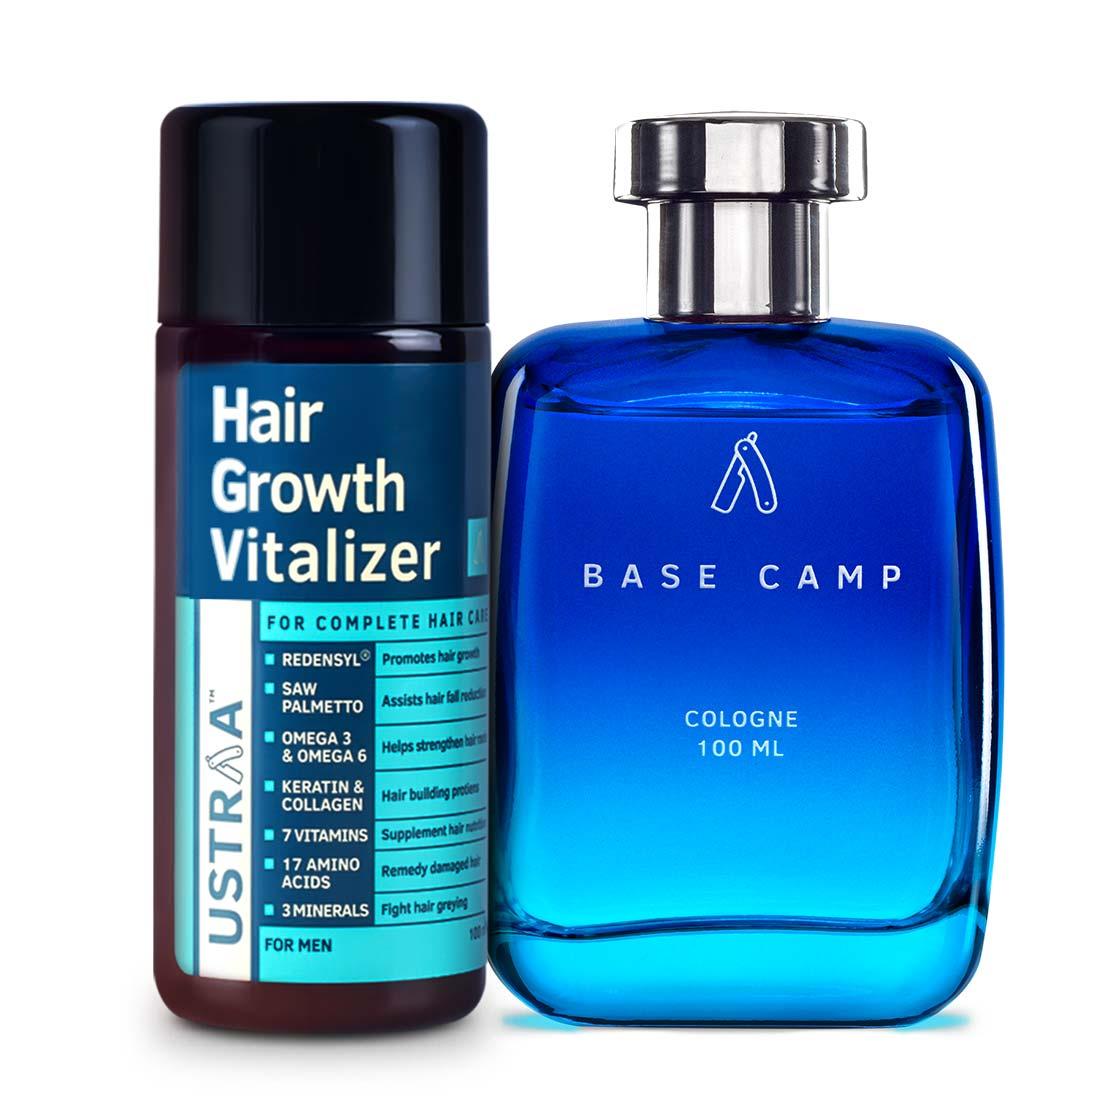 Base Camp Cologne - 100 ml - Perfume for Men  & Hair Growth Vitalizer